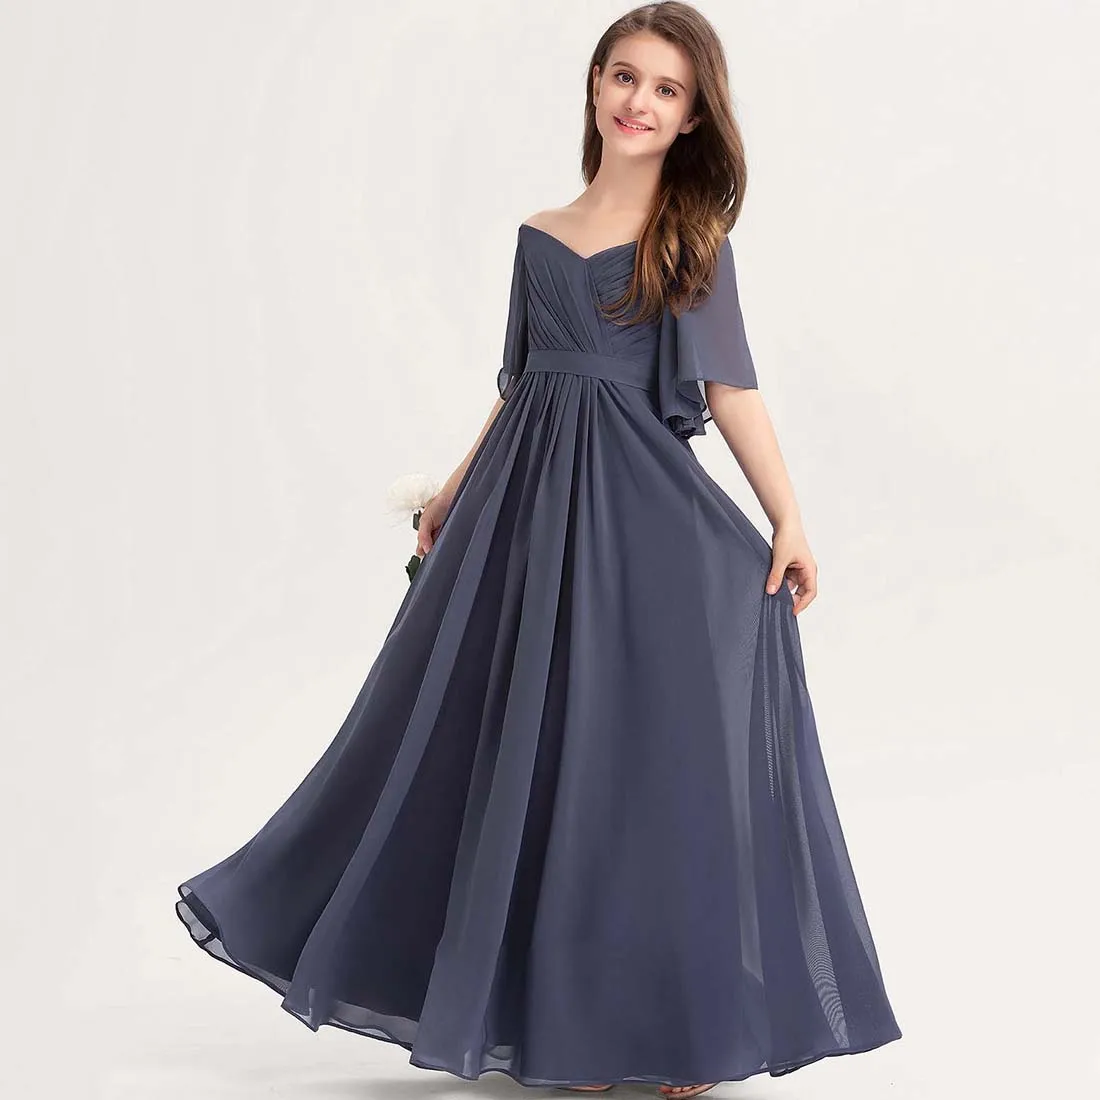 YZYmanualroom Chiffon Junior Bridesmaid Dress With Bow A-line Off the Shoulder Floor-Length 2-15T